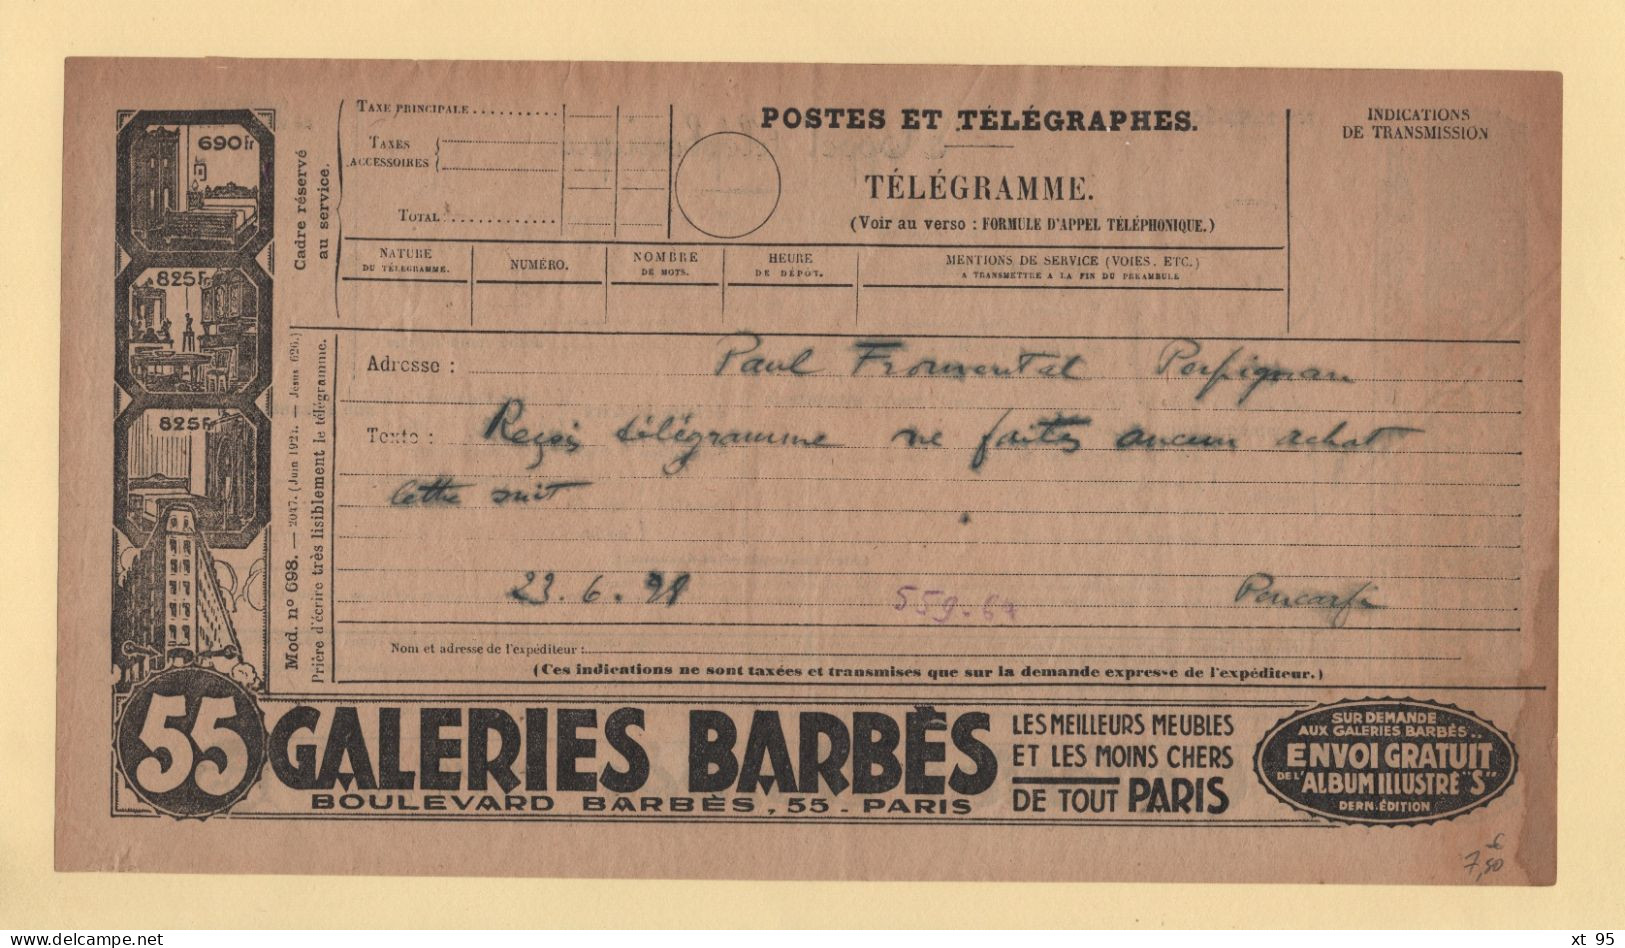 Telegramme Illustre - Galeries Barbes - 1928 - Perpignan - Telegraph And Telephone